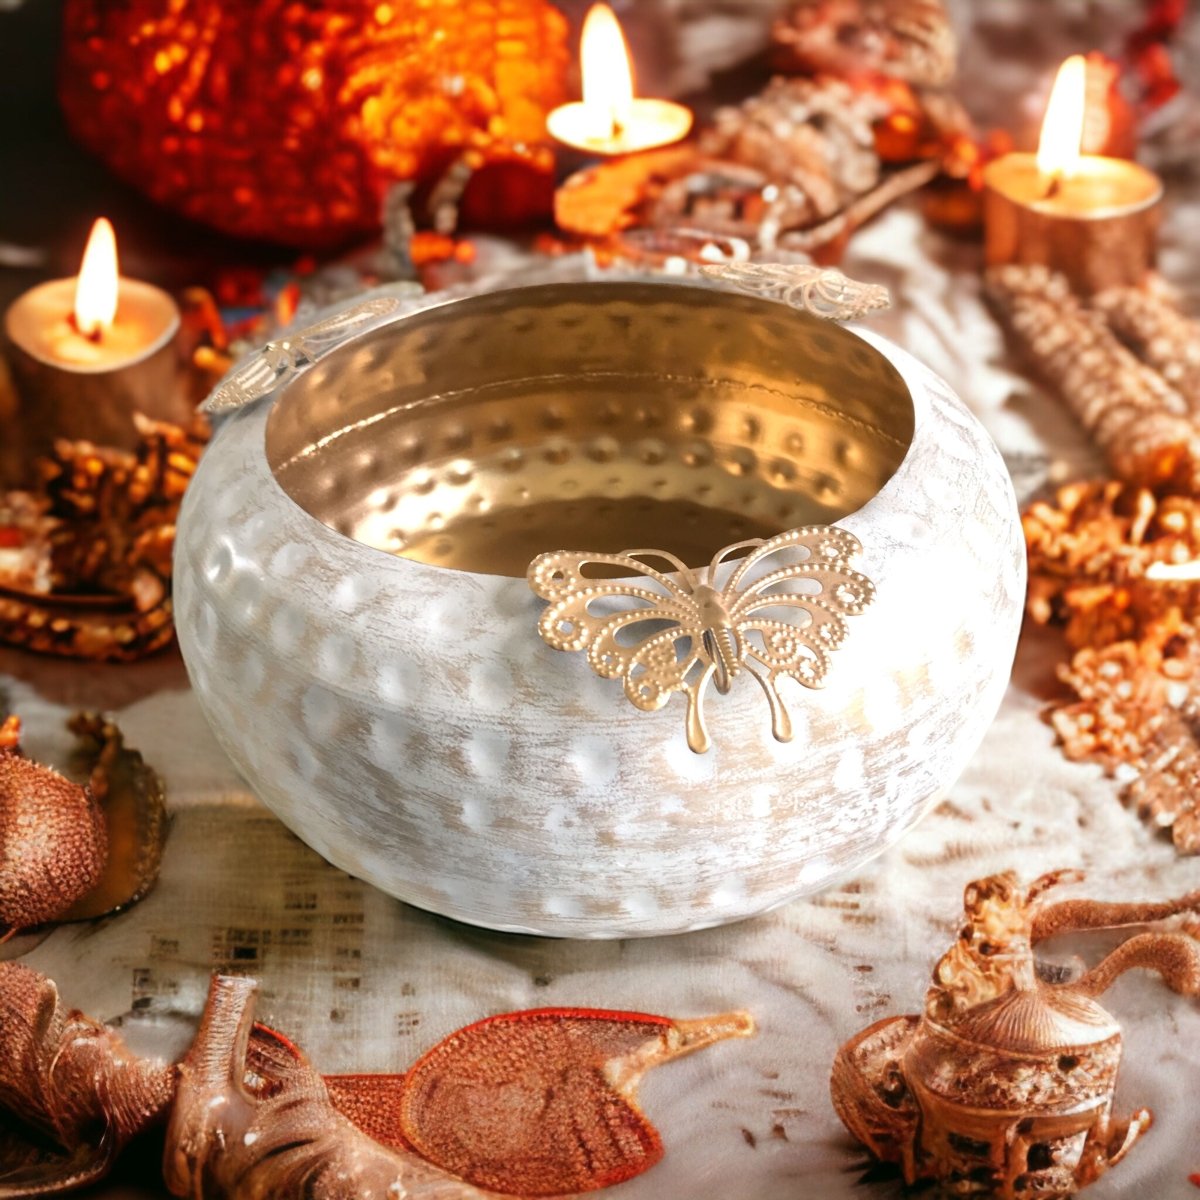 Kezevel Metal Decorative Urli Bowl - Butterfly Motif White Golden Handcrafted Decorative Bowls for Home Decor, Urli Pots, Size 30.48X30.48X13 CM - Kezevel